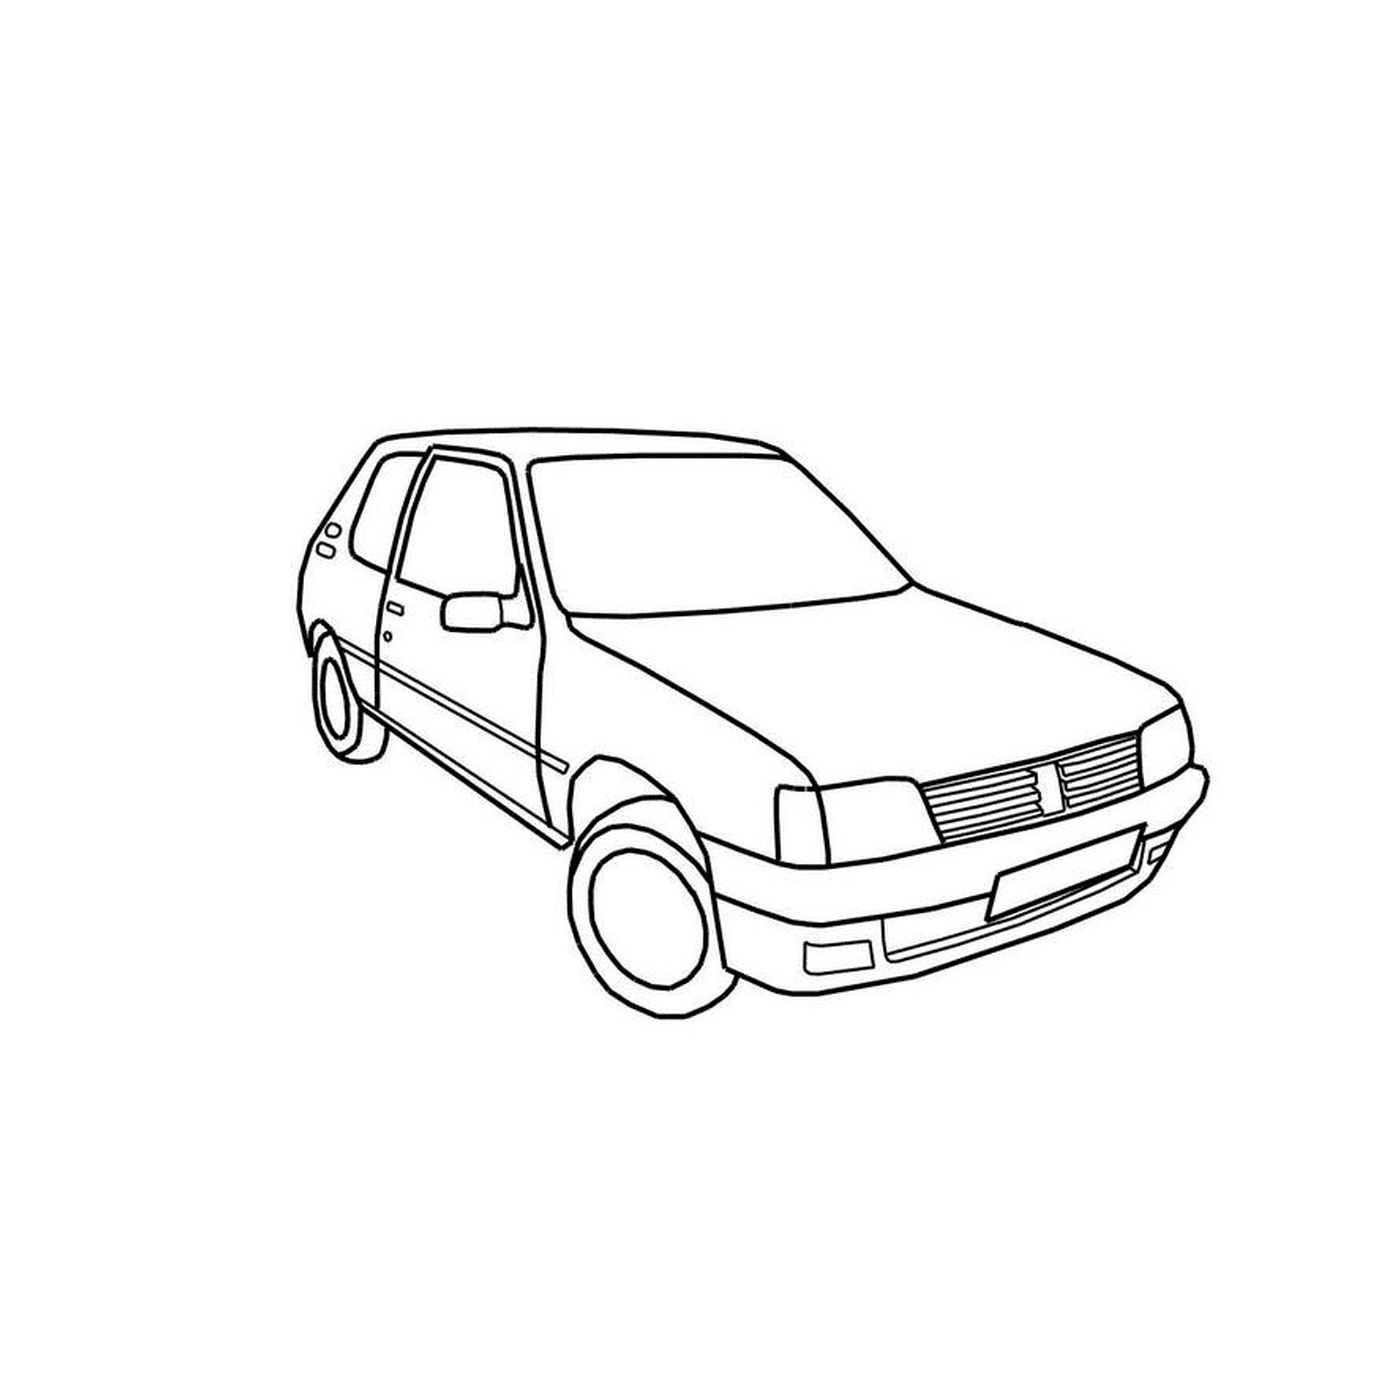  Carro Peugeot 205 desenhado 